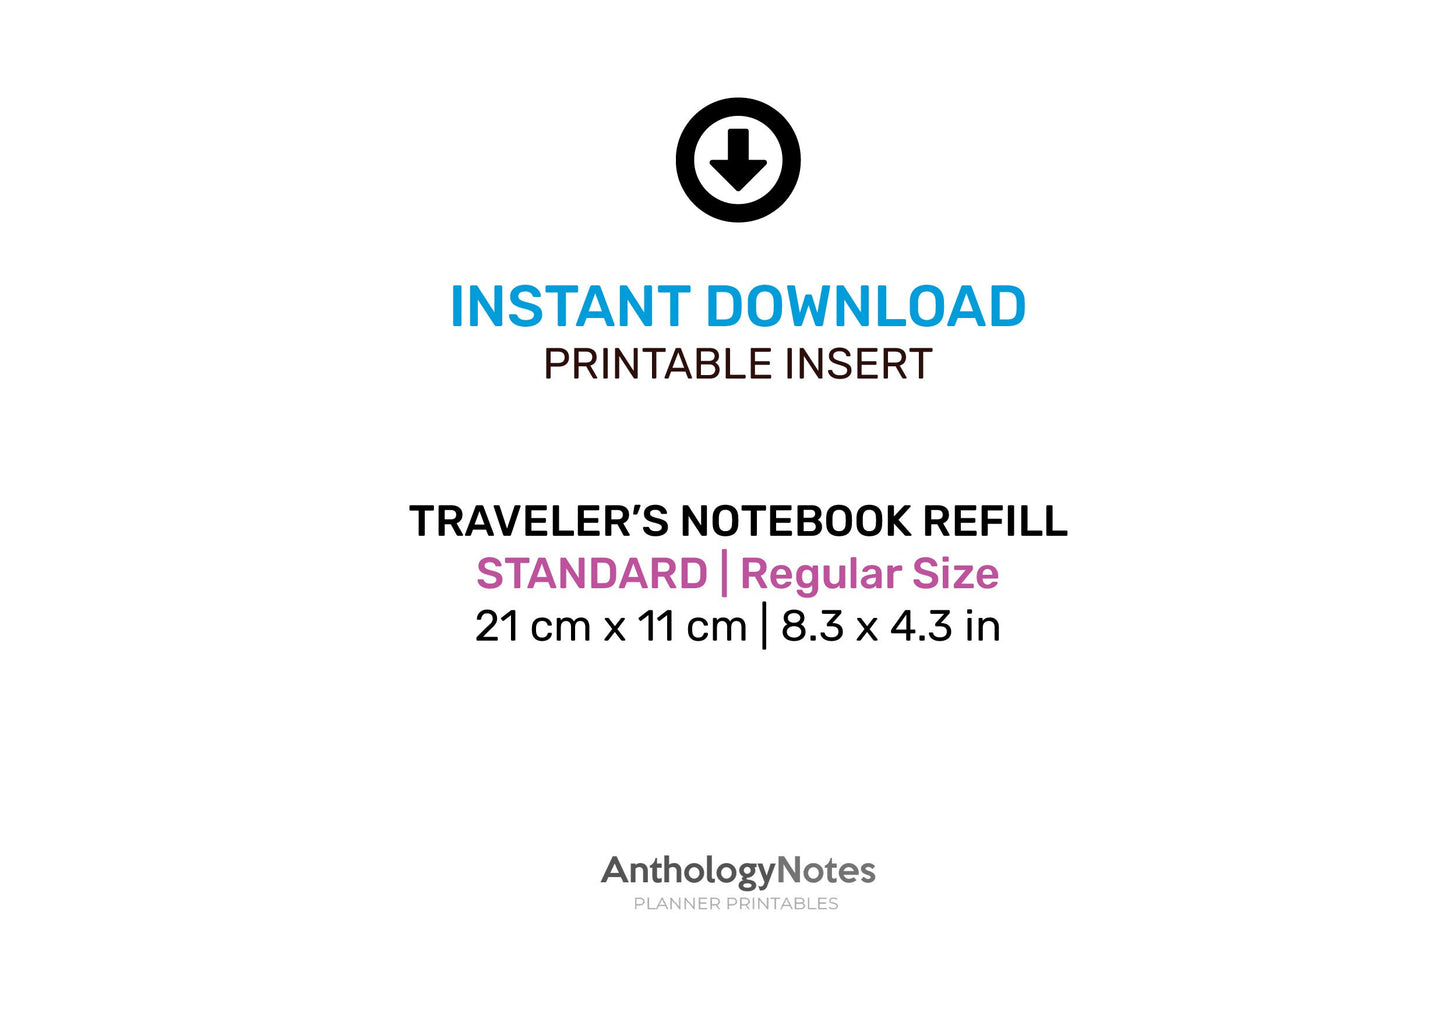 Standard TN DUTCH DOOR Weekly Vertical, Monthly, Tracker, Printable Traveler's Notebook Refill - DDR01